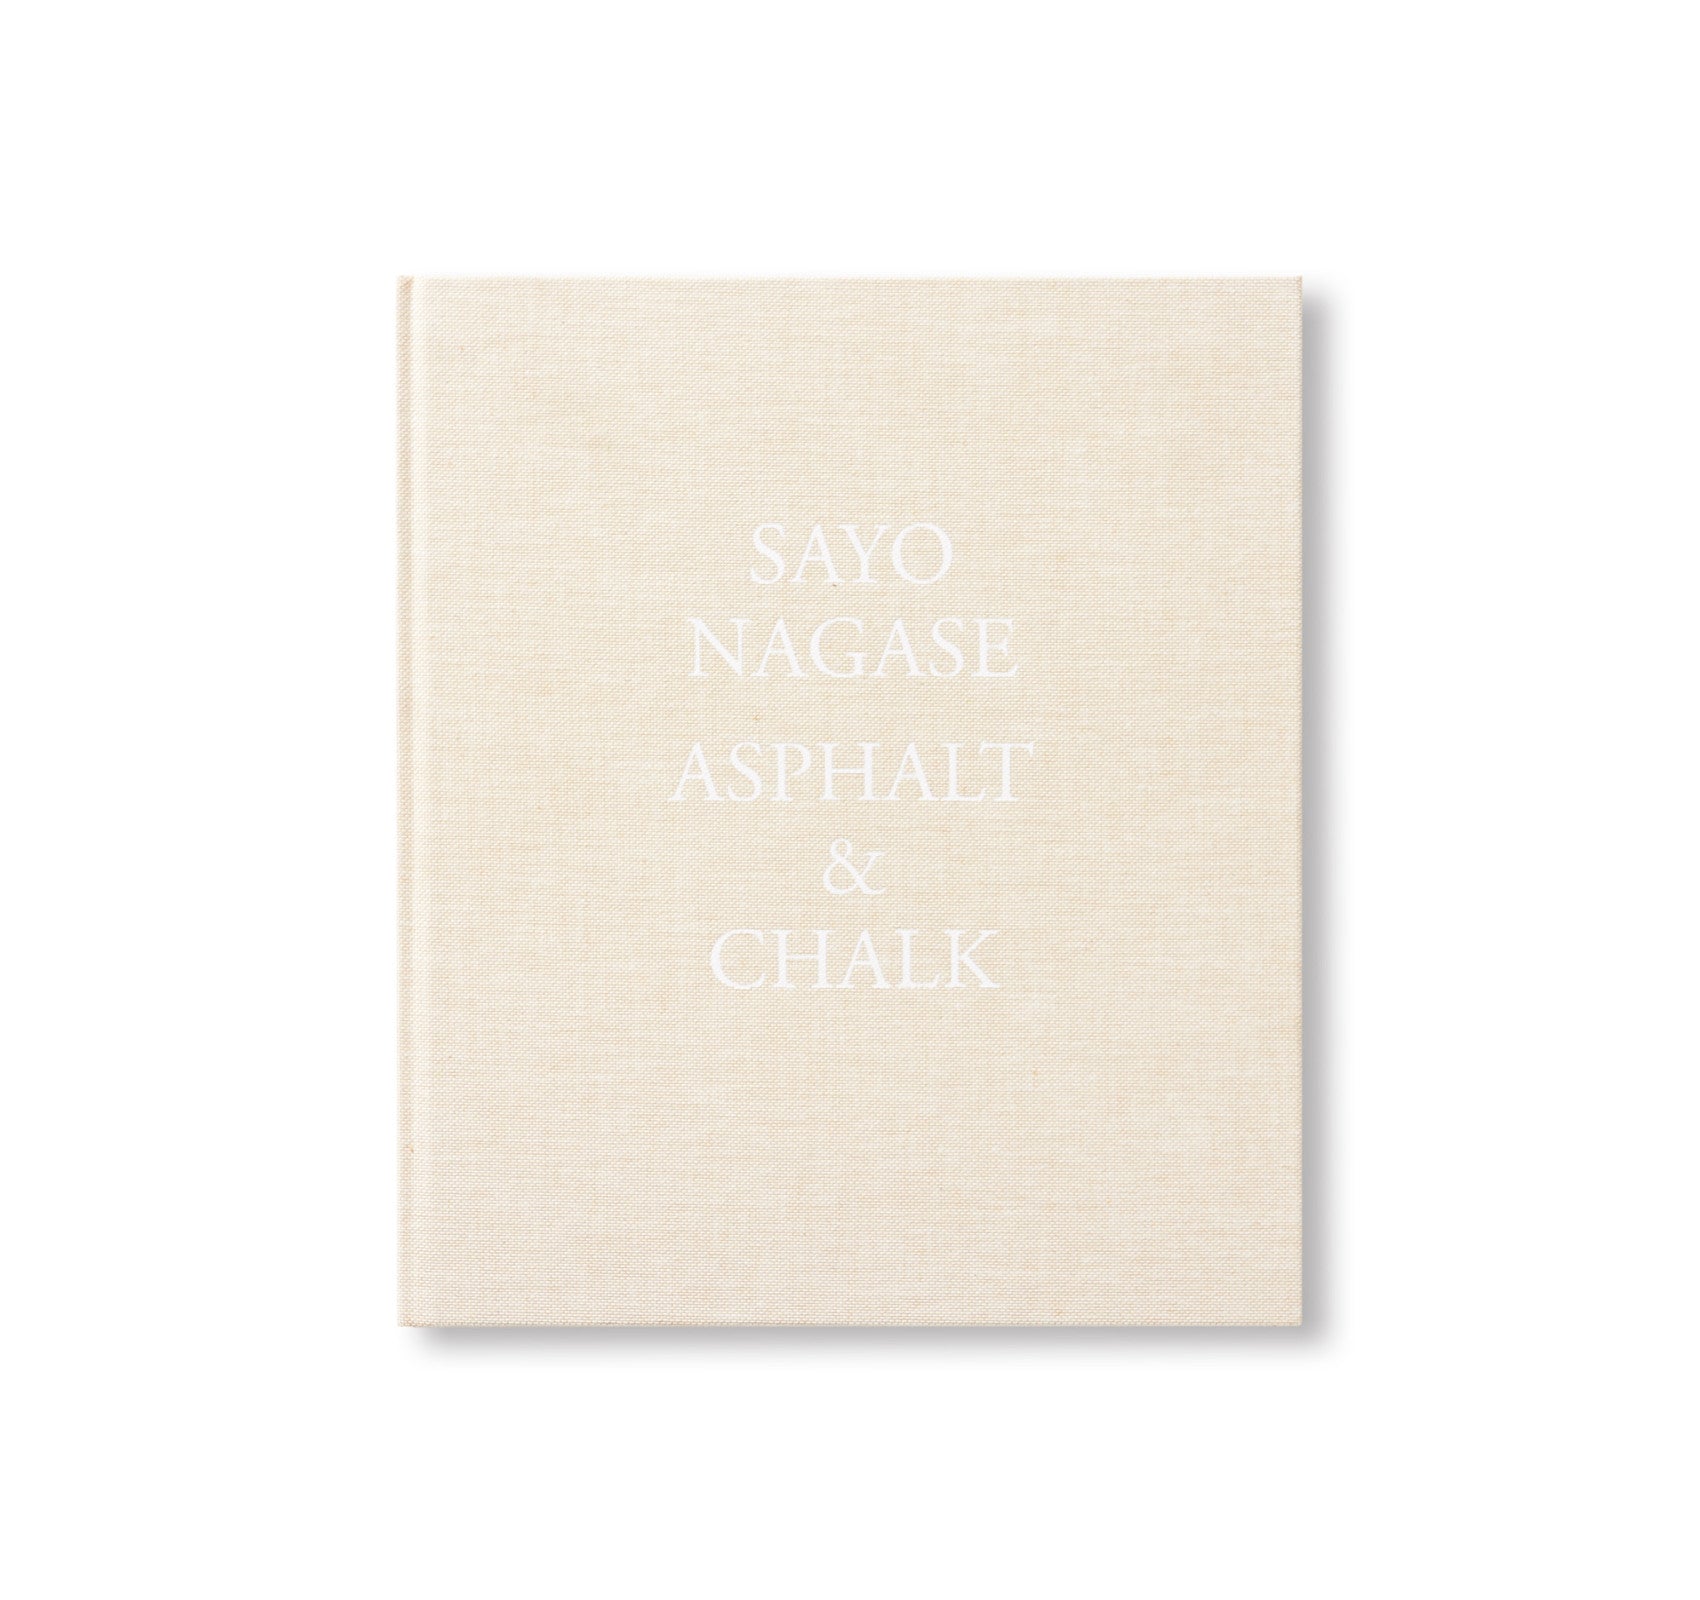 ASPHALT & CHALK by Sayo Nagase